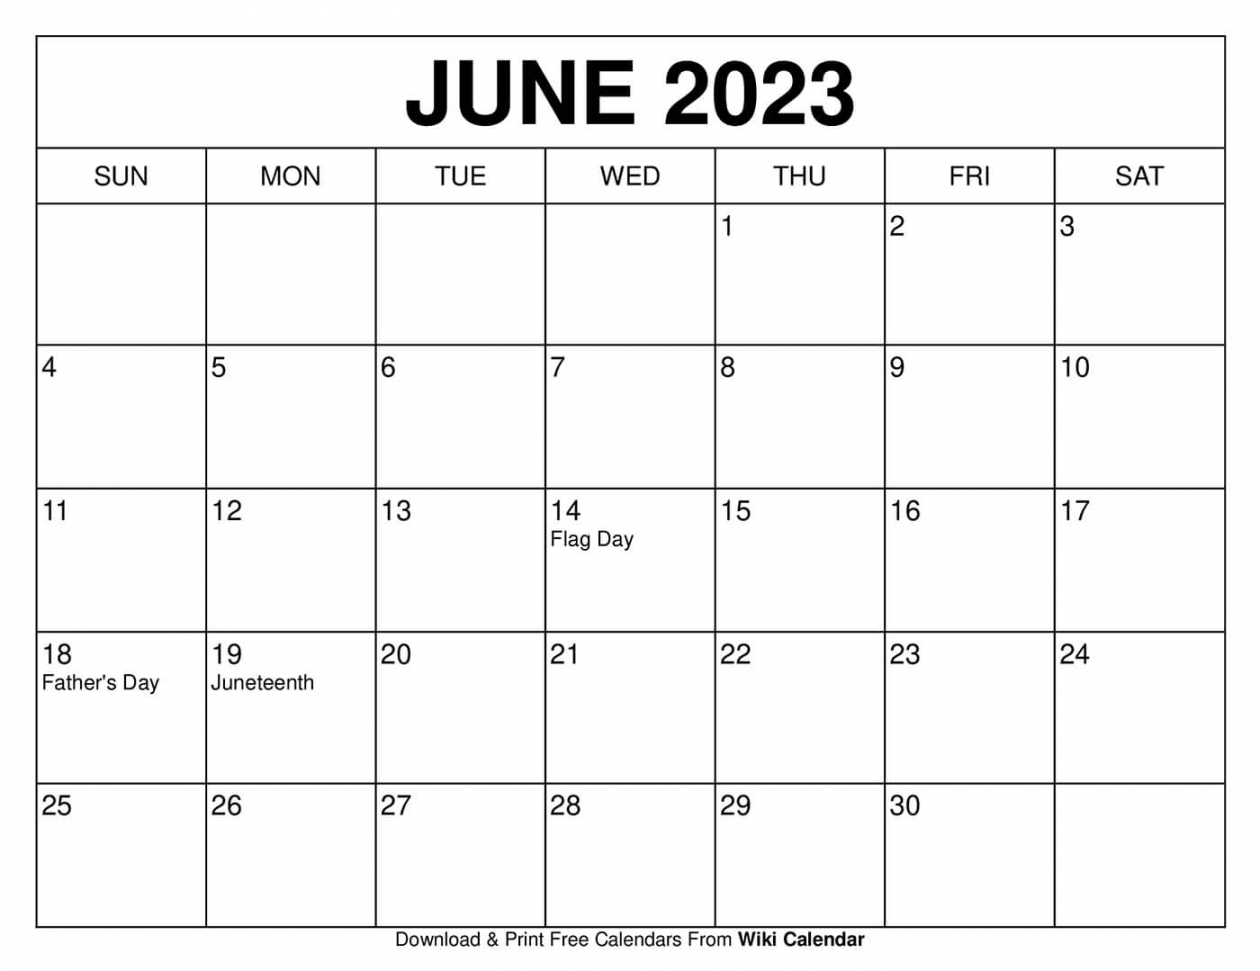 Free Printable June 2023 Calendar - Printable - Free Printable June  Calendar Templates With Holidays - Wiki Calendar